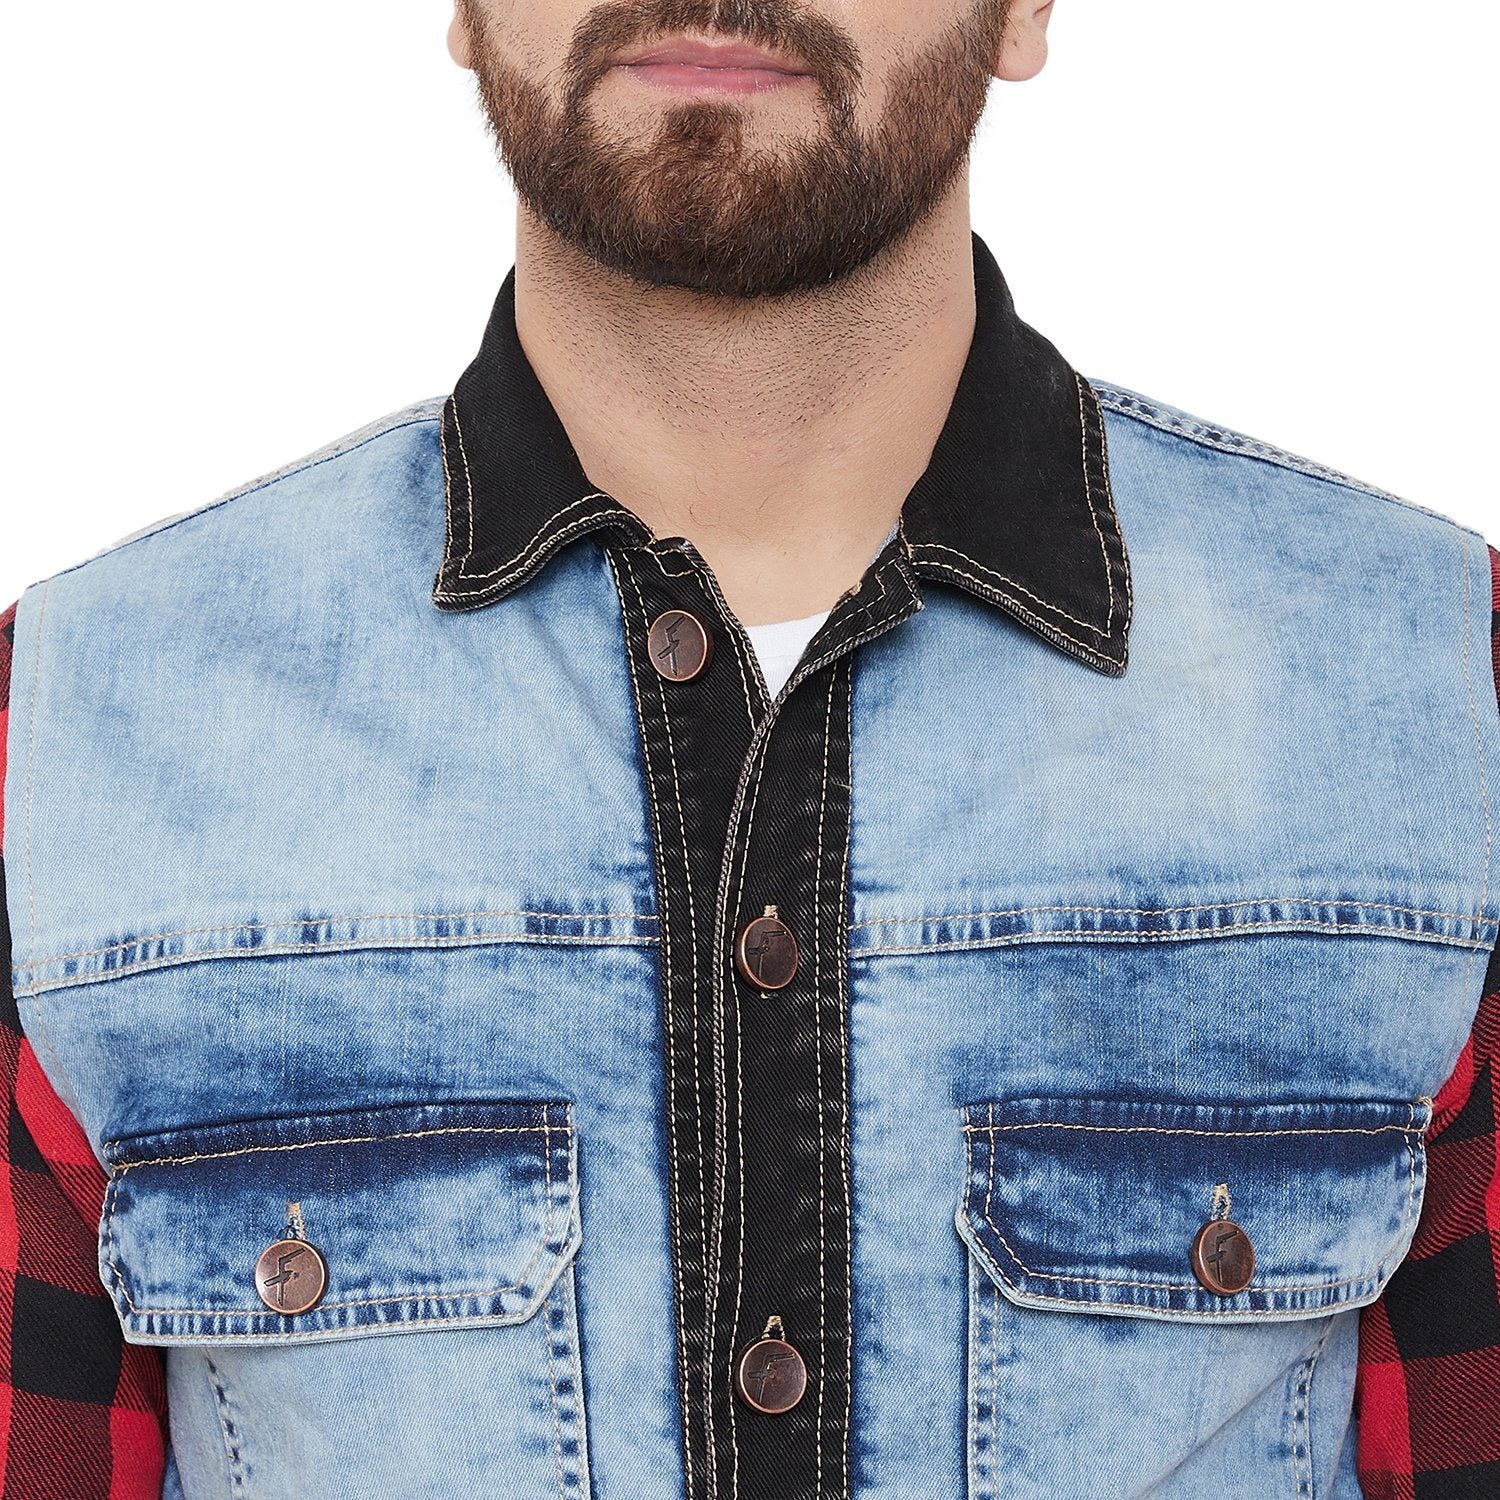 How to Wear a Jean Jacket  Personal Styling  Stitch Fix